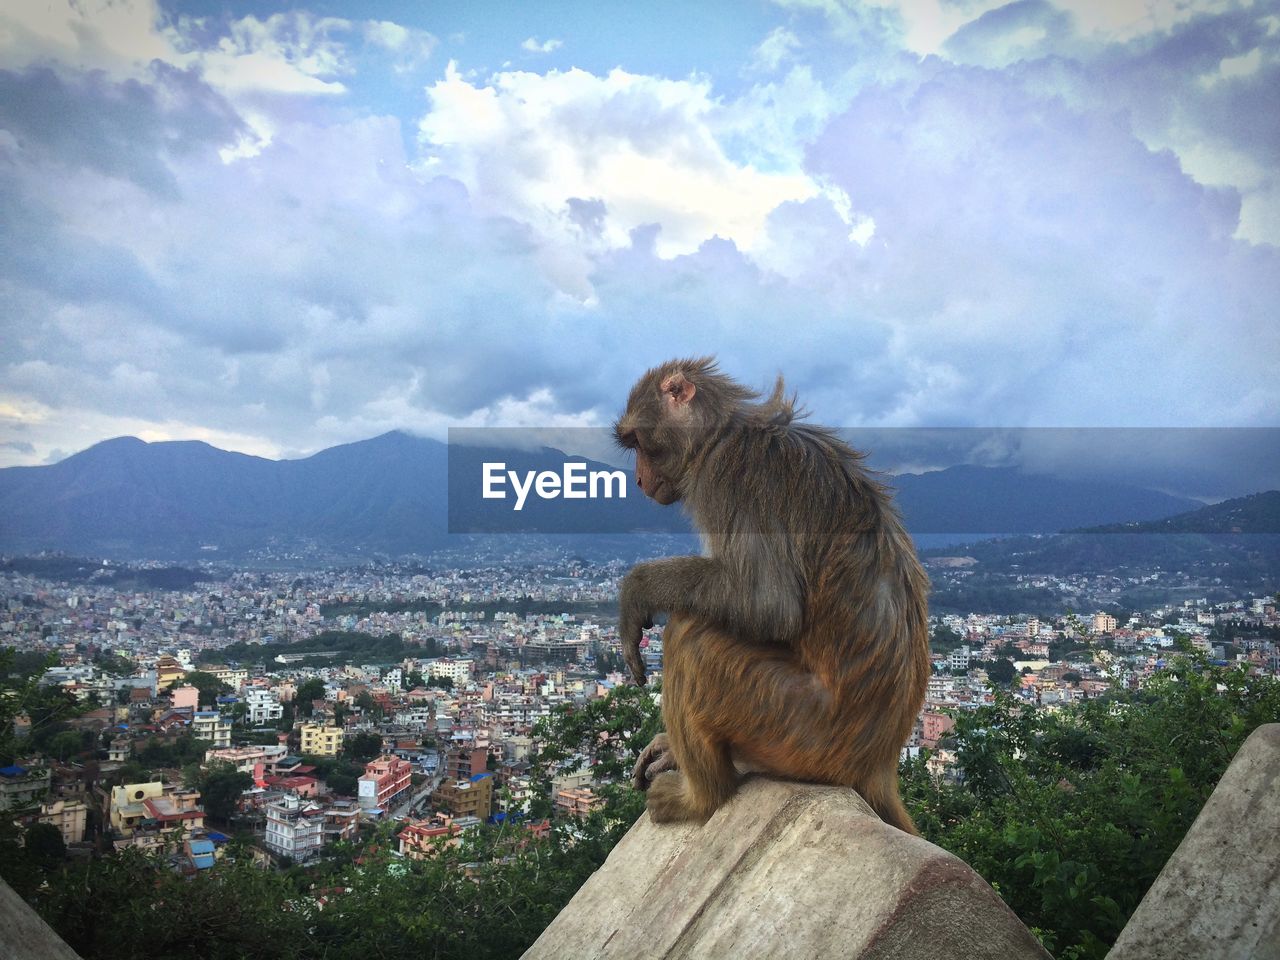 Monkey sitting on retaining wall against cityscape